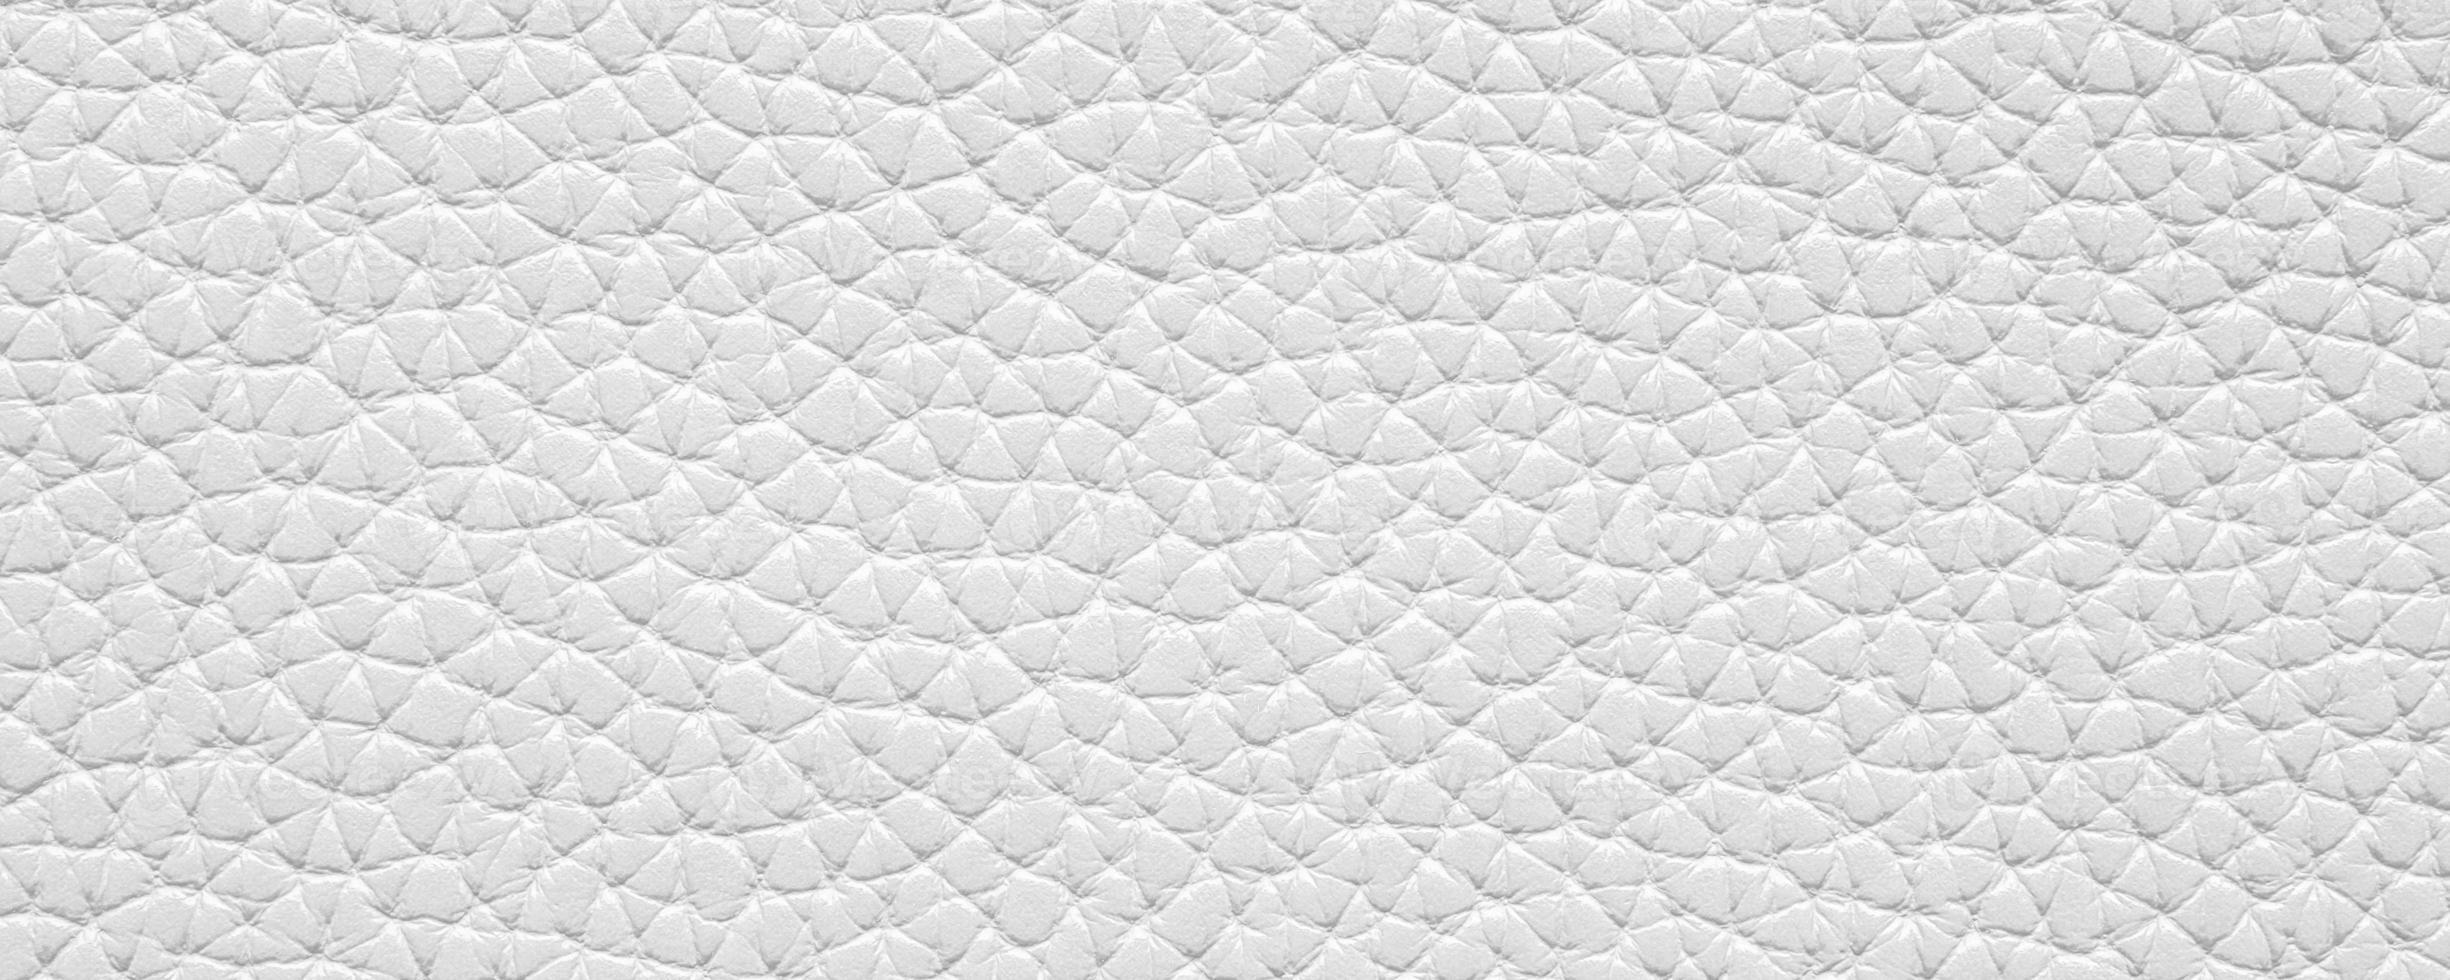 White leather texture luxury background 12968222 Stock Photo at Vecteezy